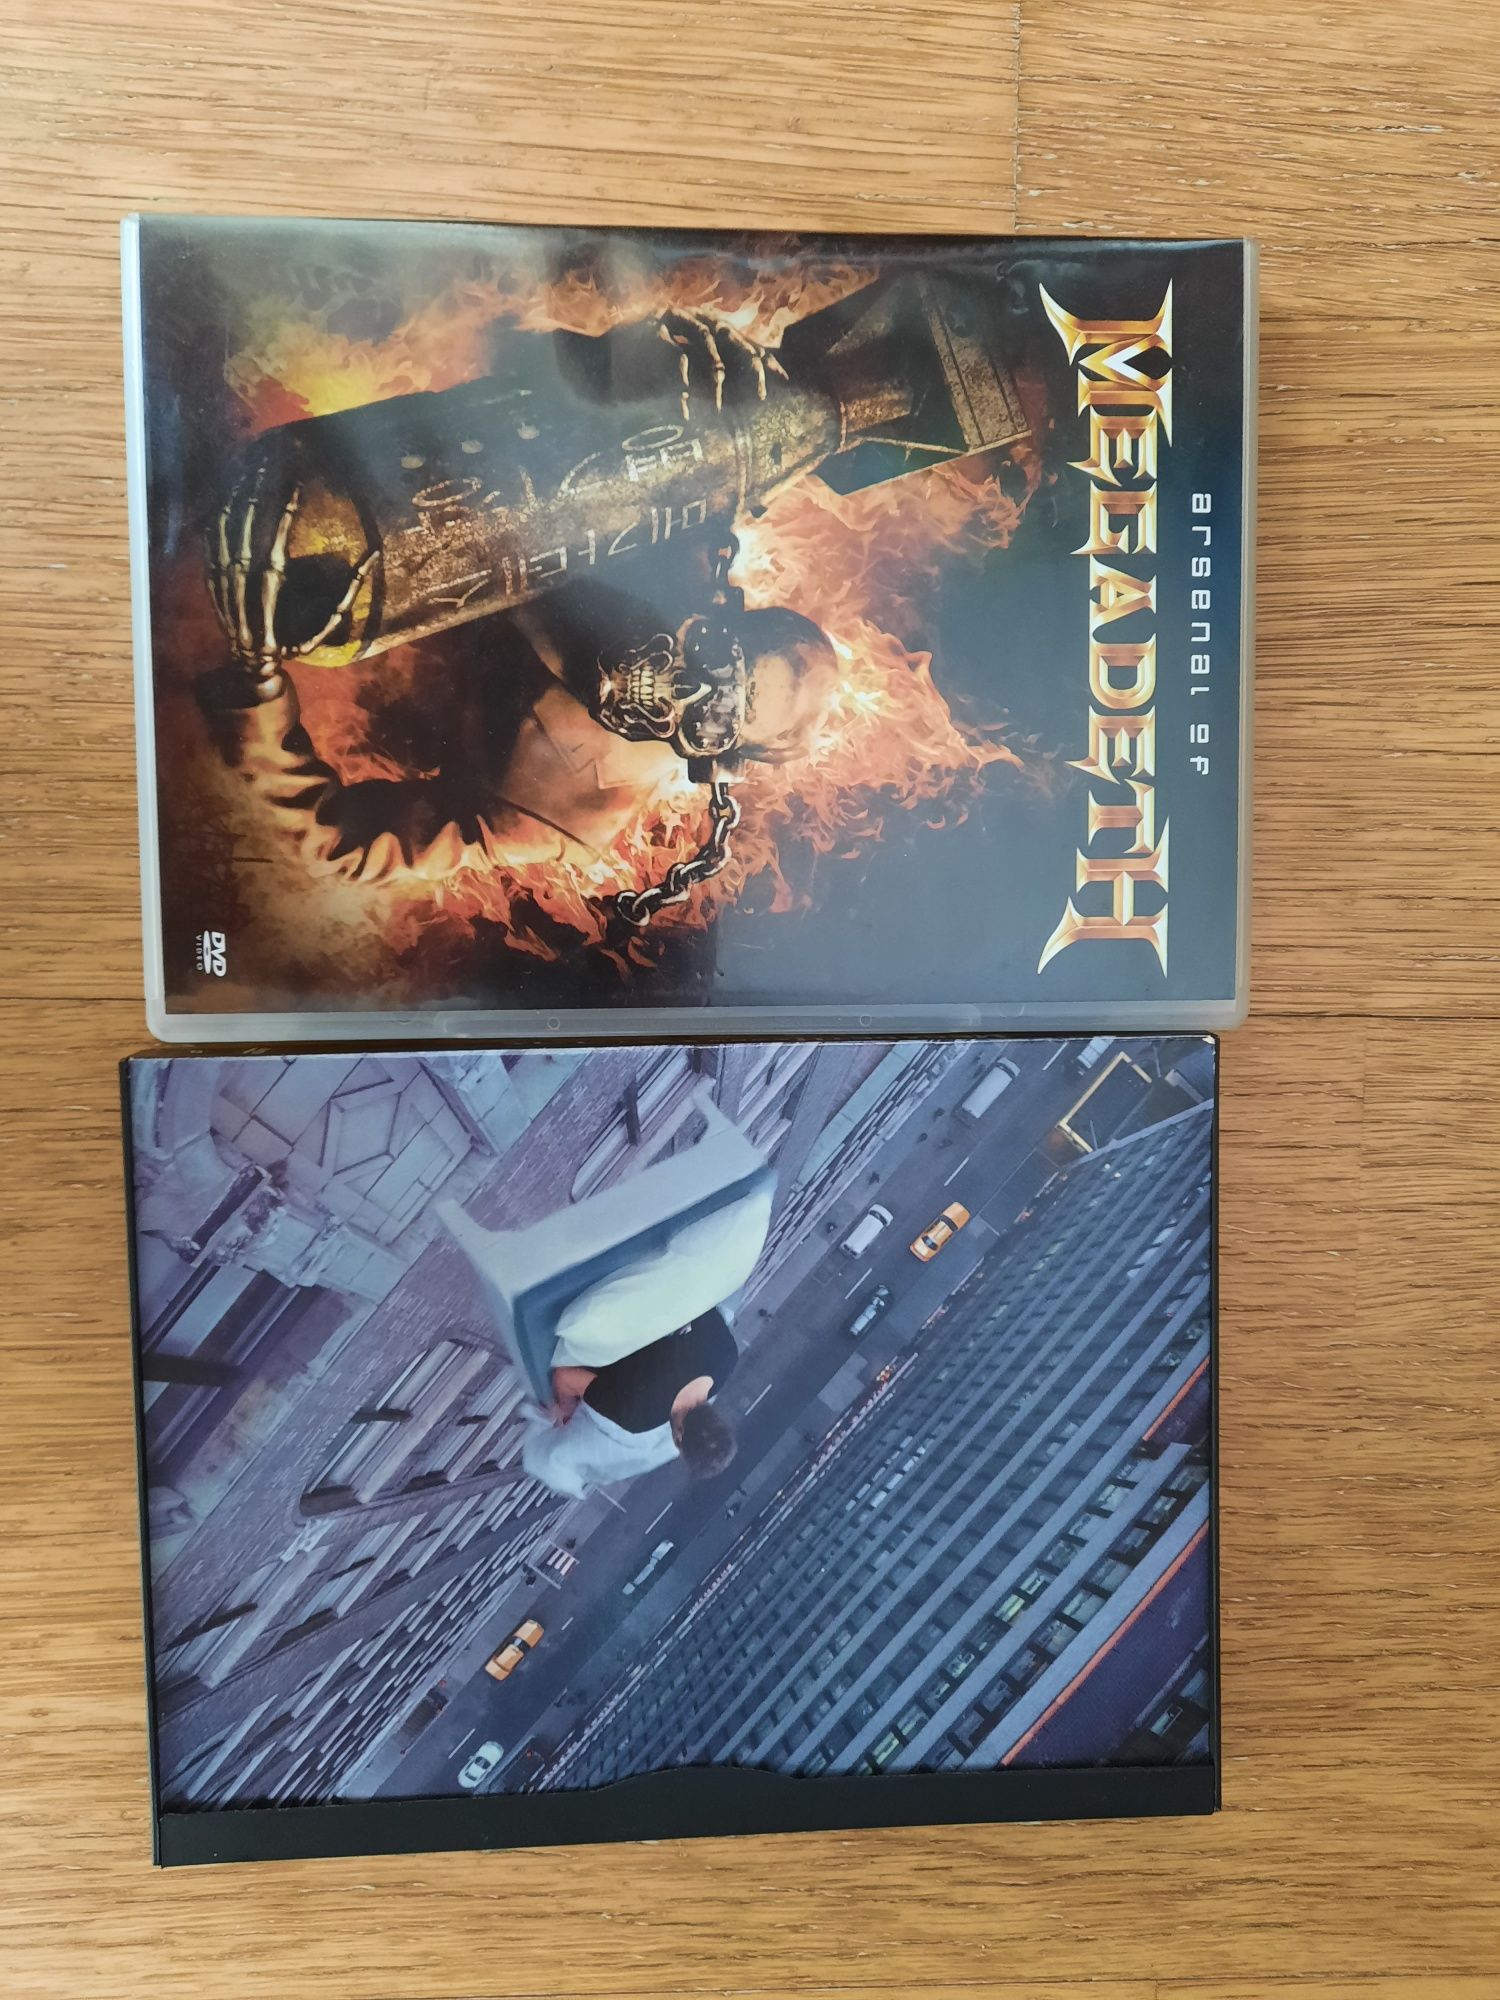 CDS dvds Metallica megadeth sepultura cavalera conspiracy metal CD dvd